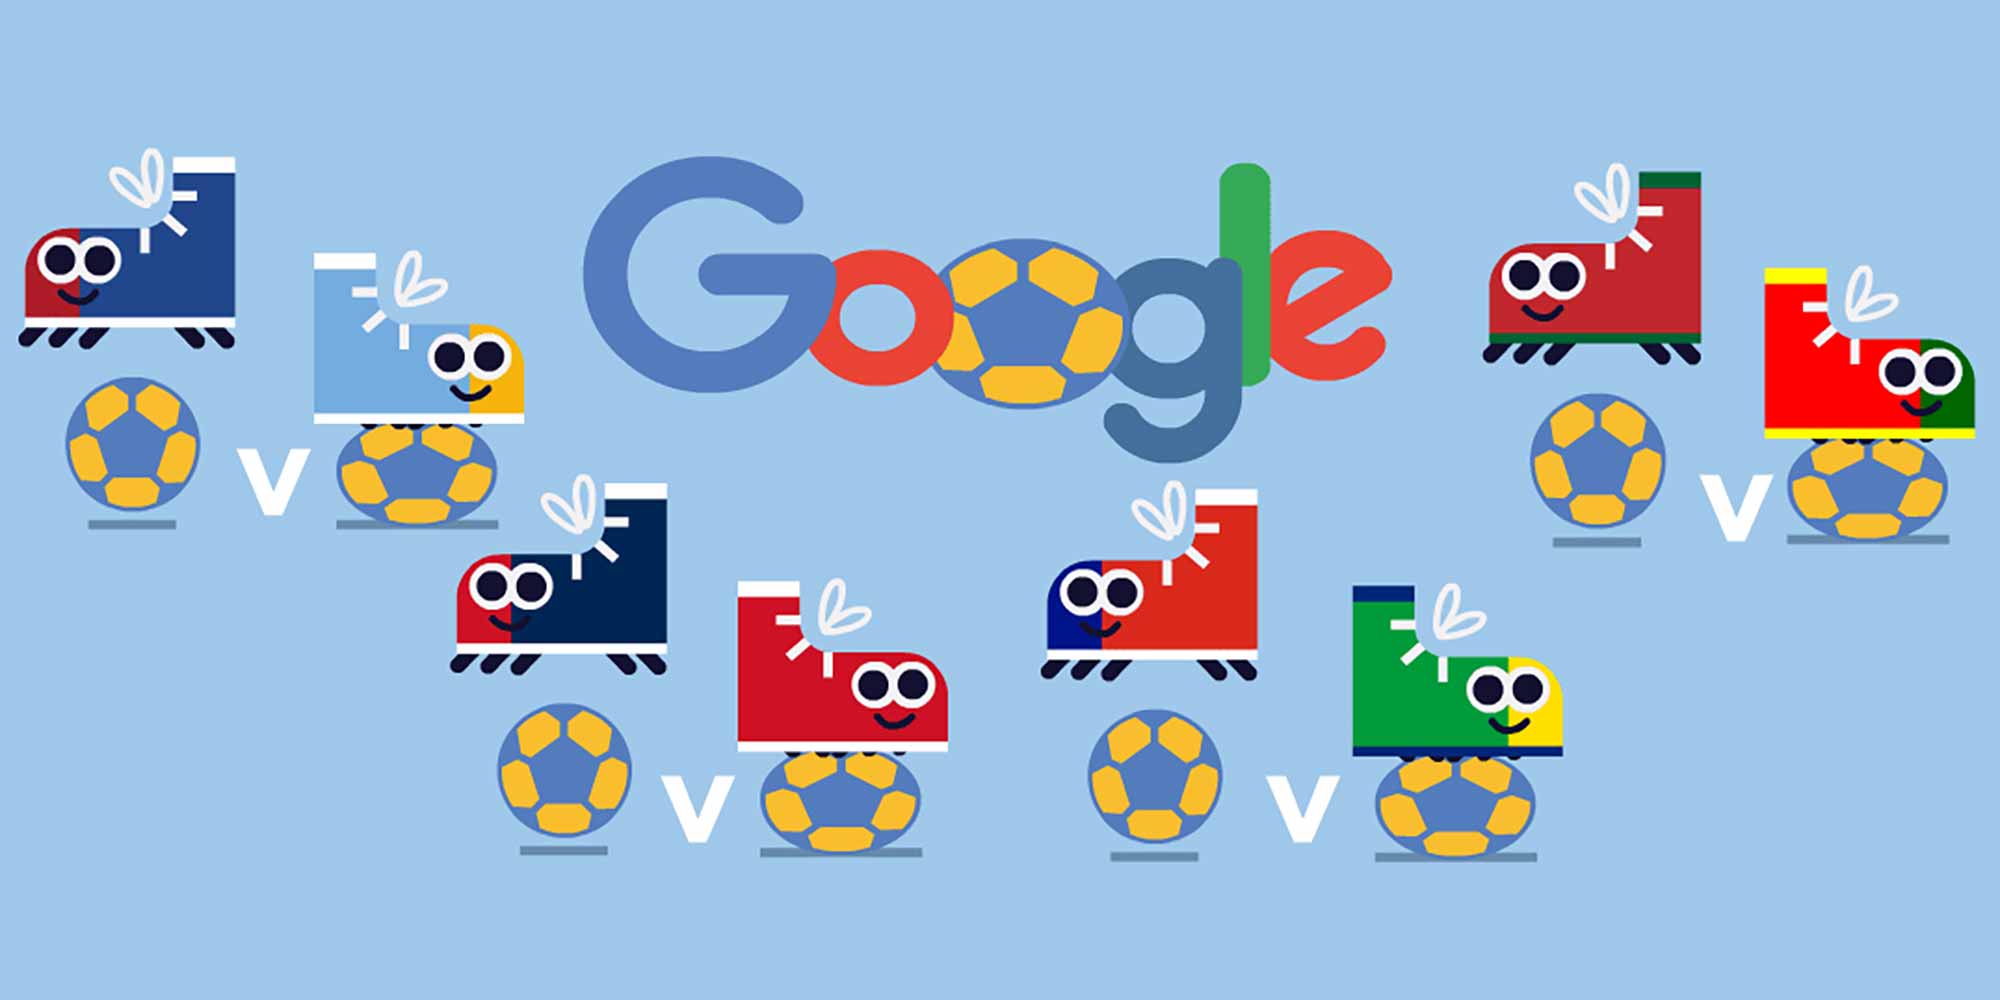 2022 World Cup Quarter Finals Google celebrates with Doodle